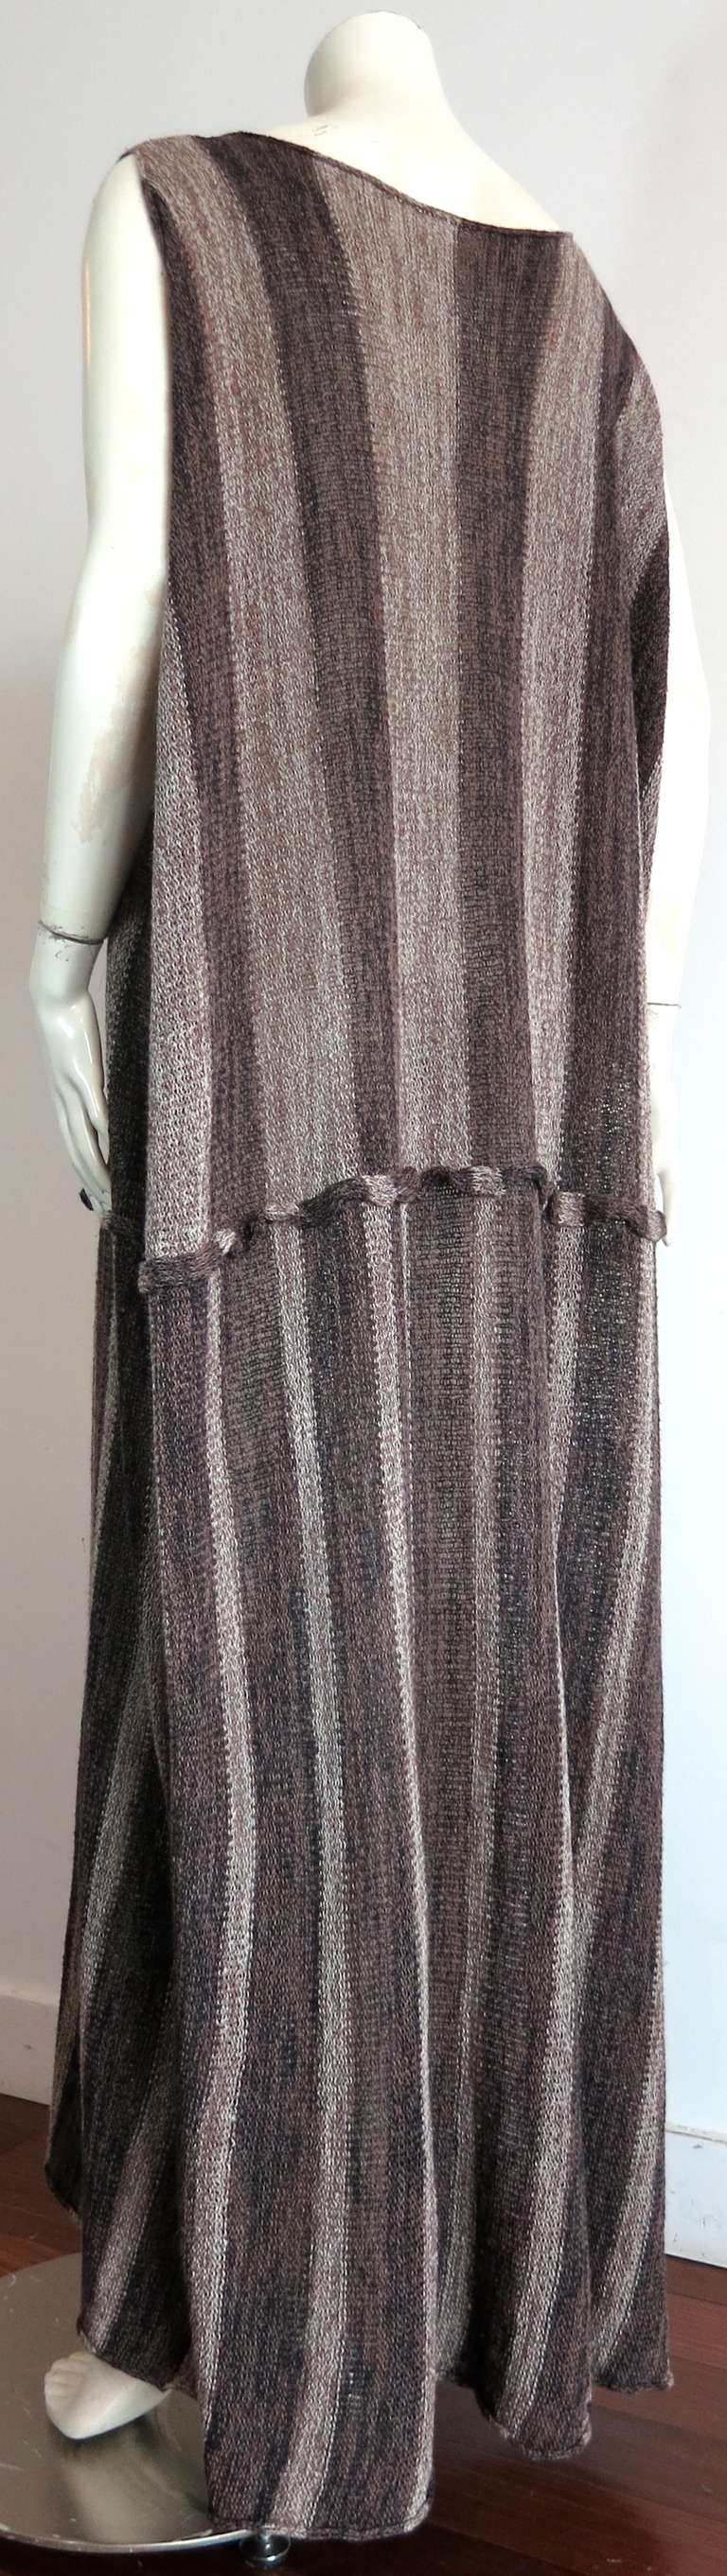 Vintage ISSEY MIYAKE Linen sweater knit dress 1